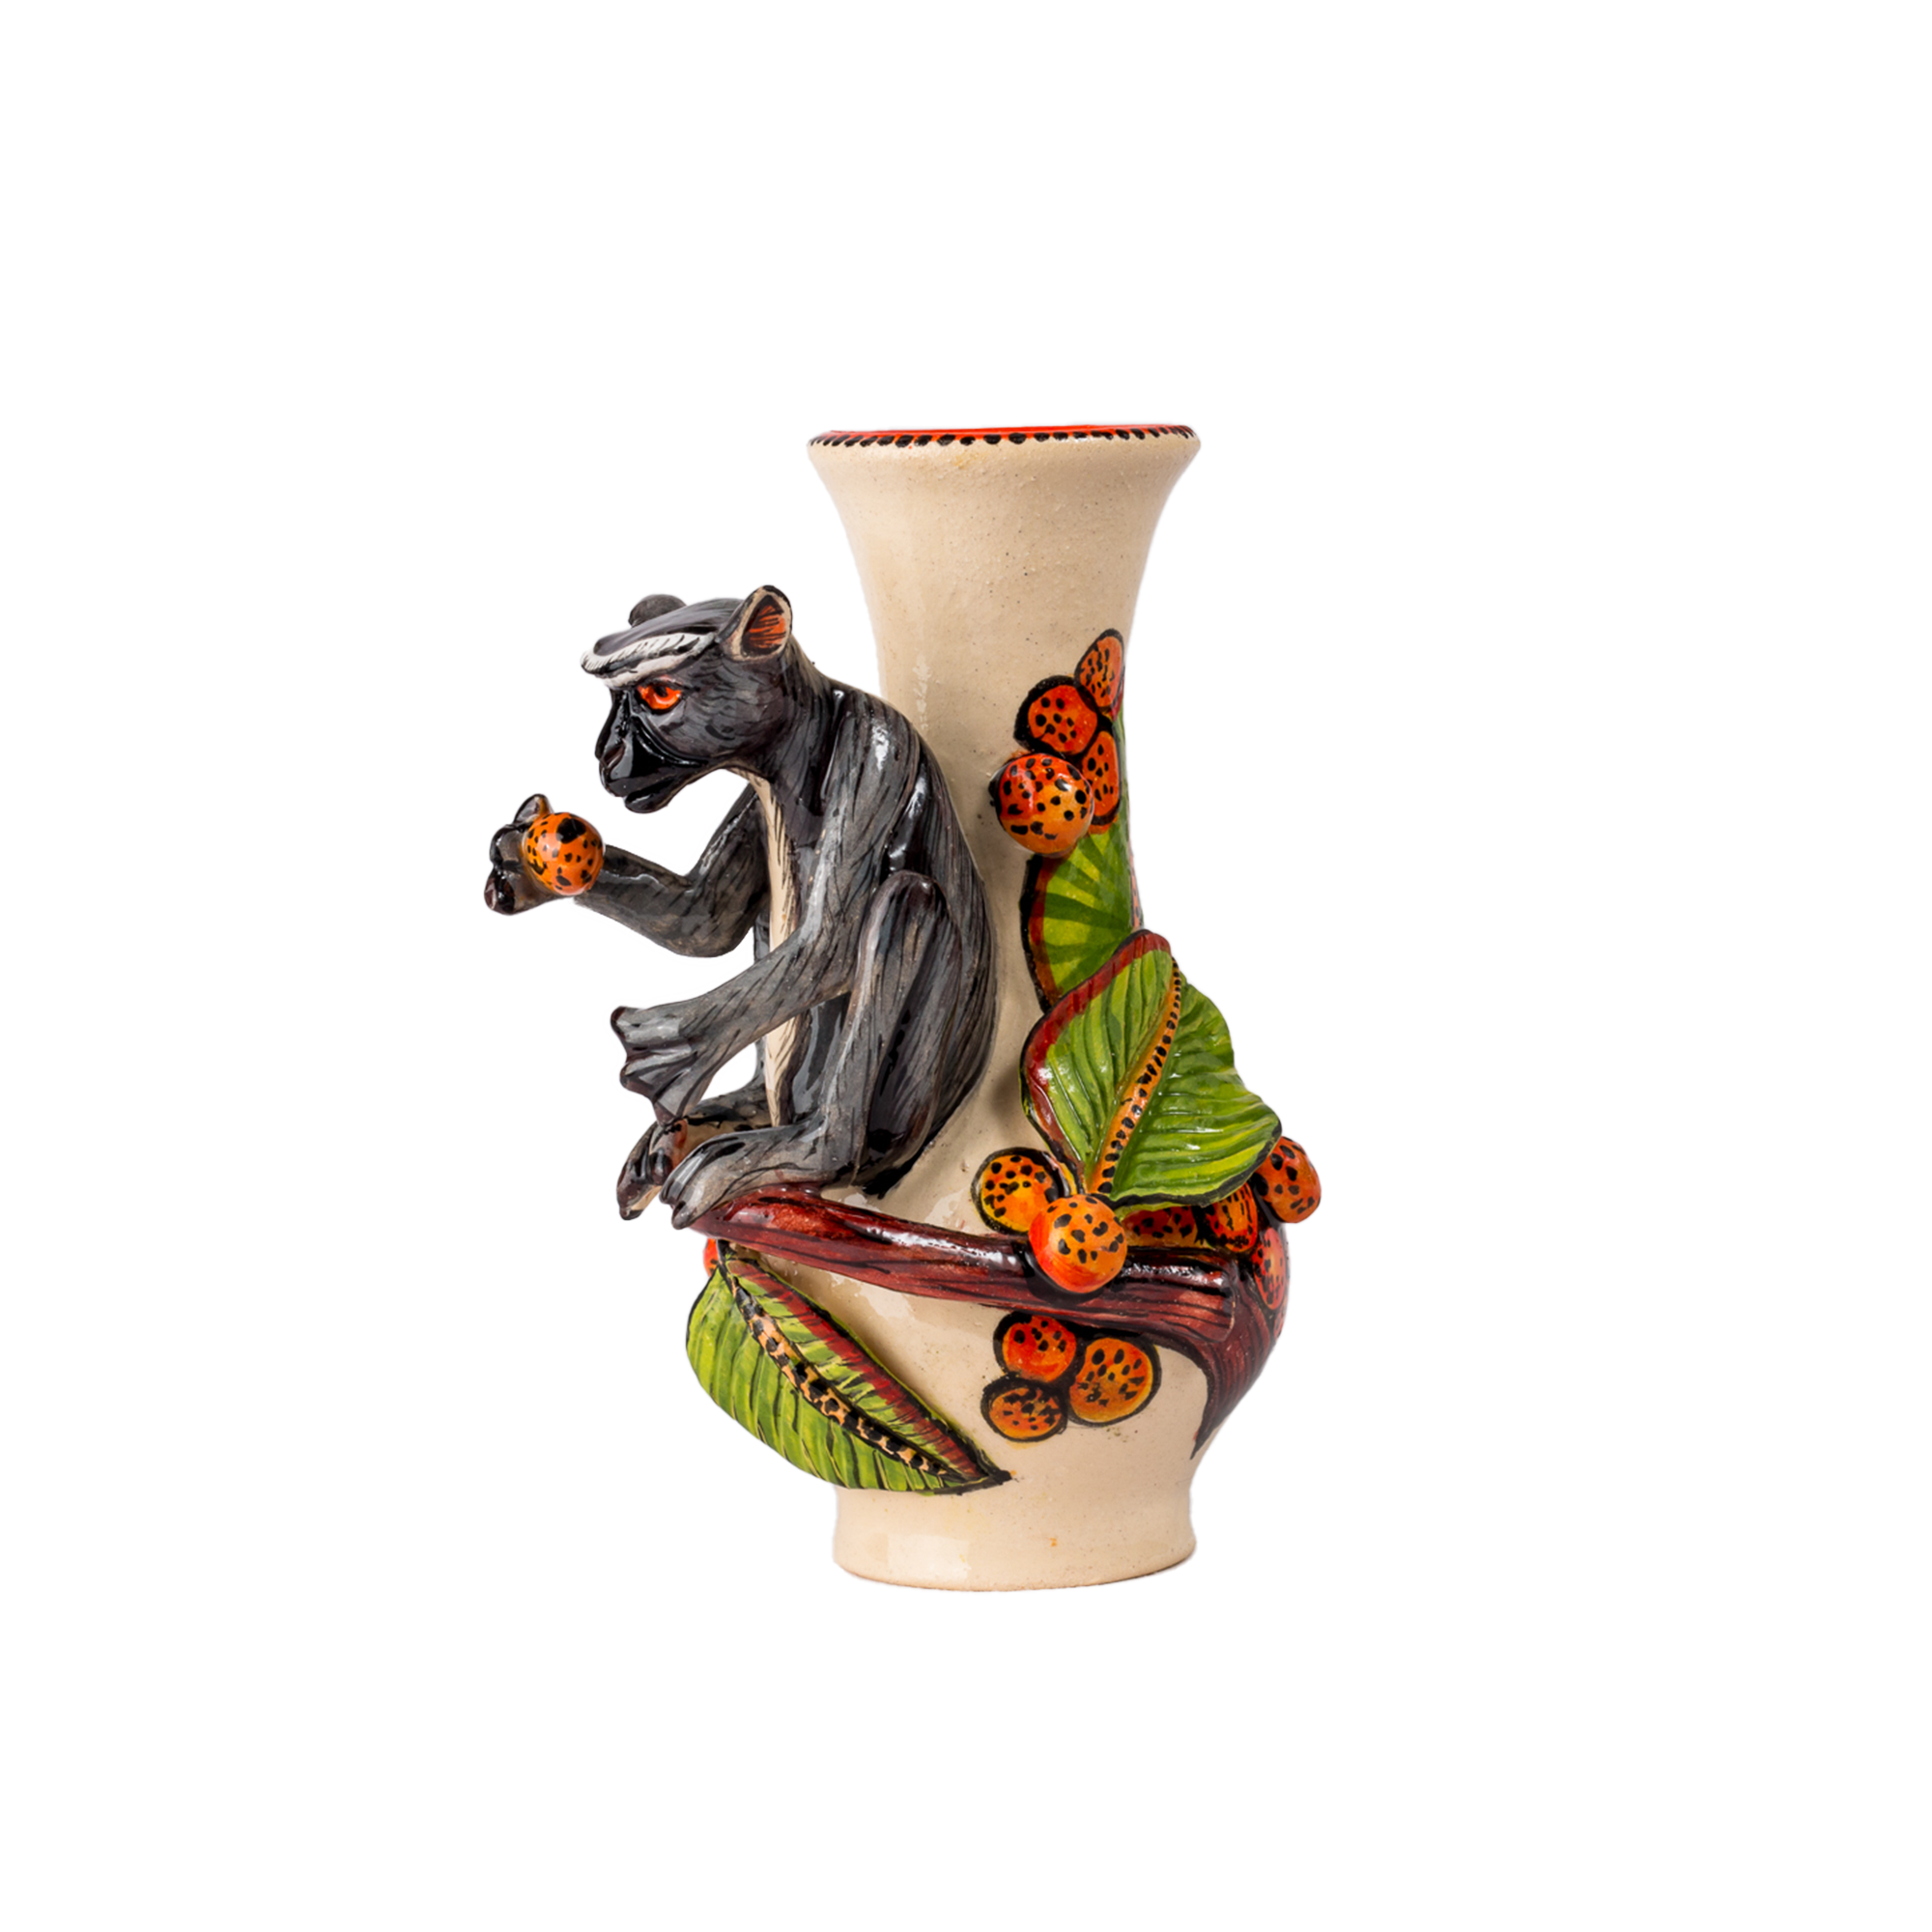 3D Ceramic Monkey Candle Holder